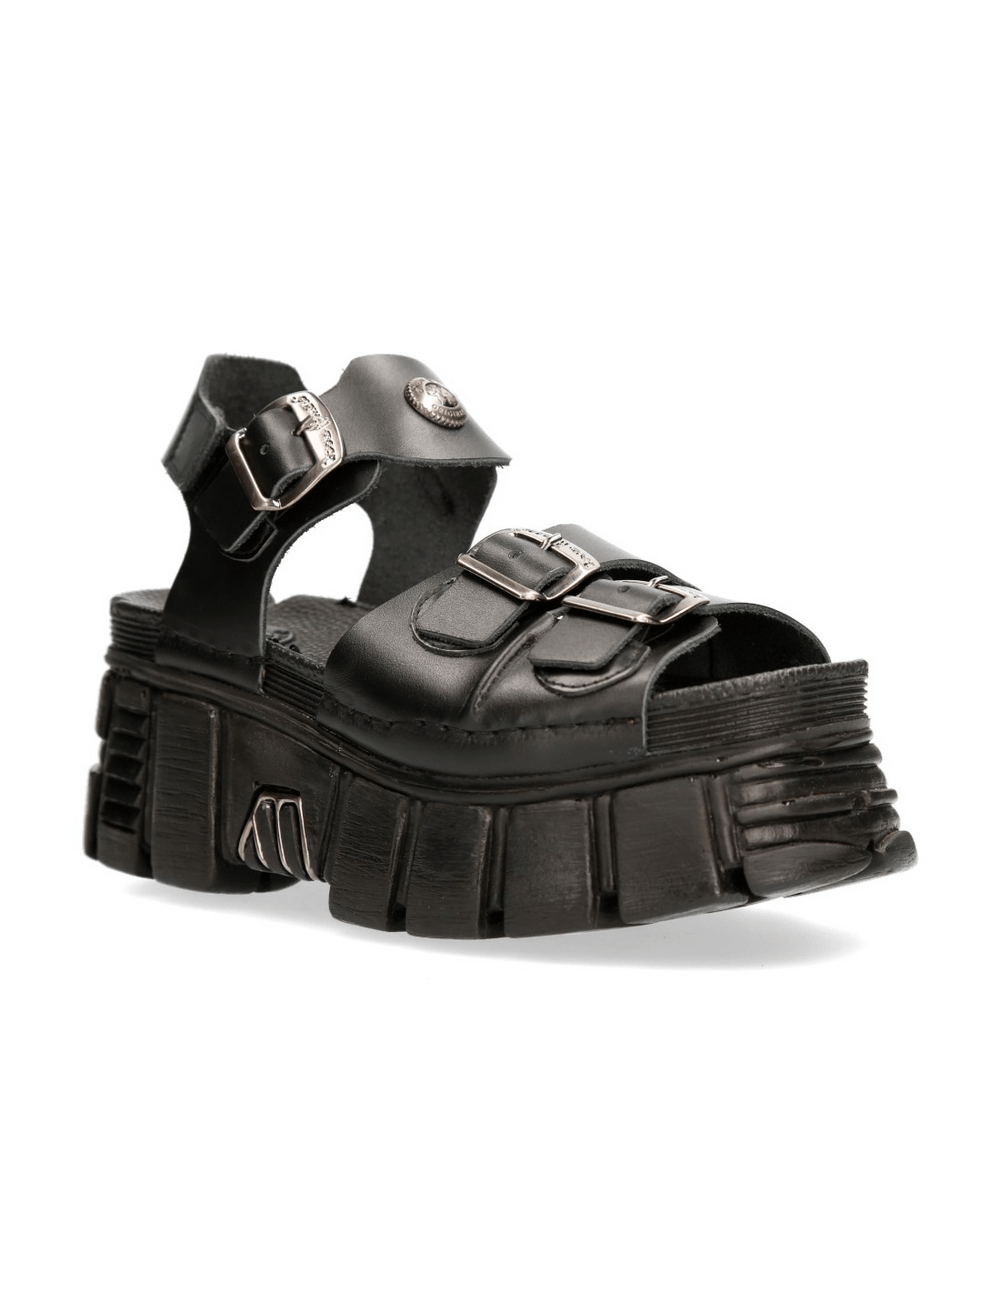 NEW ROCK Black Buckled Platform Sandals in Urban Style